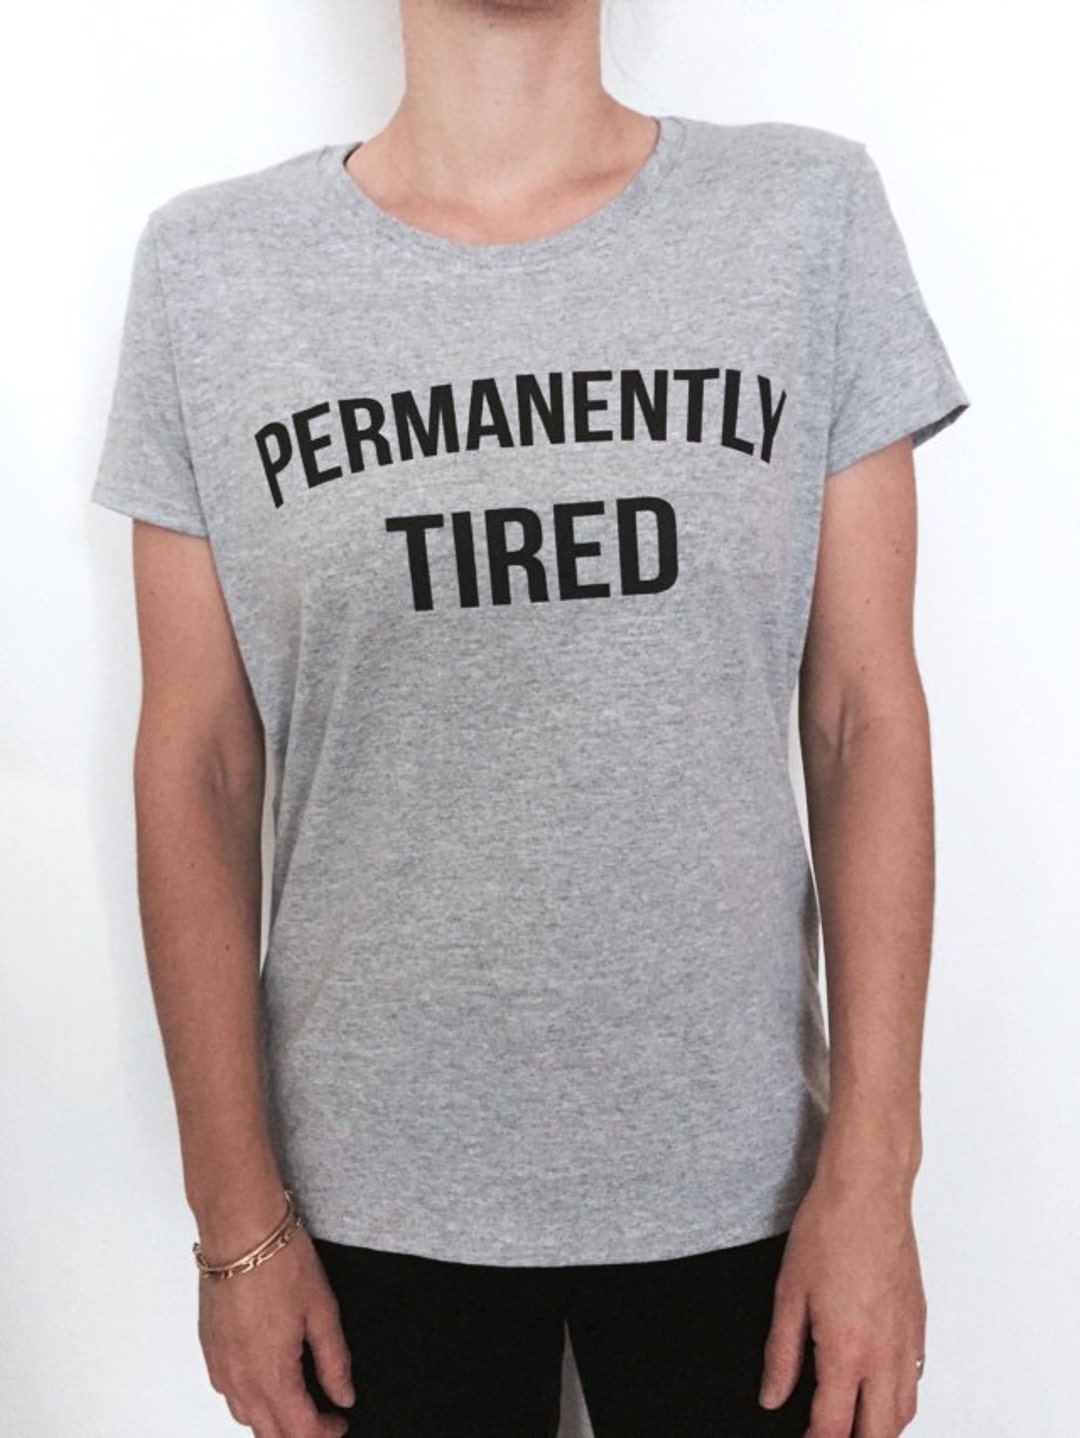 Permanently Tired Tshirt Gray Fashion Funny Slogan Womens - Etsy Canada